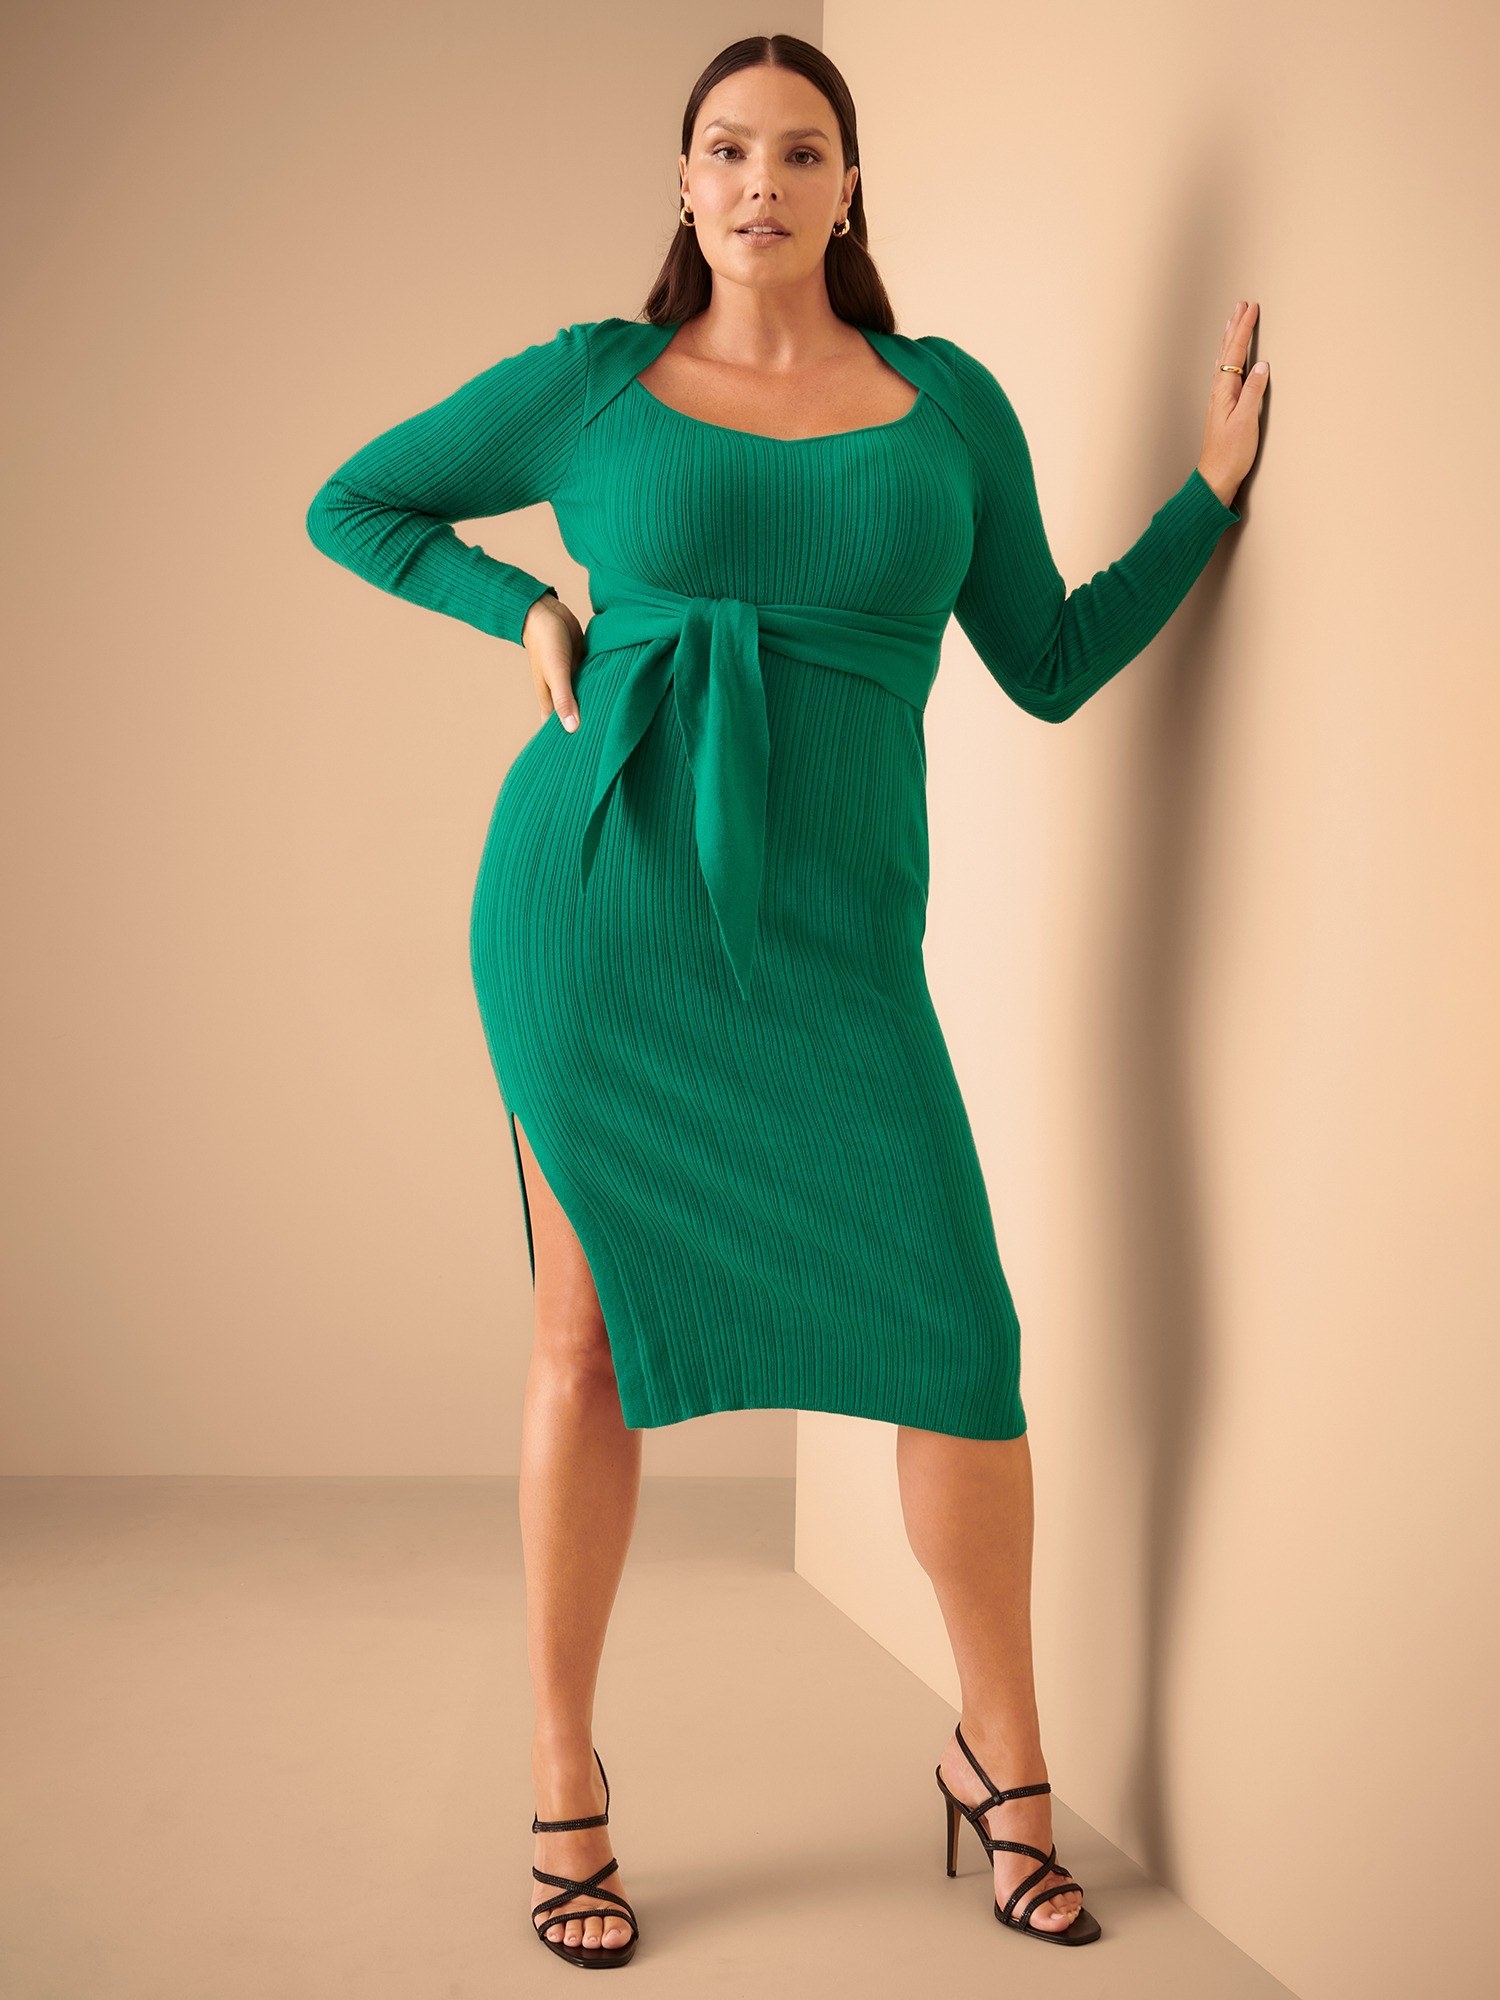 a model wearing the green dress